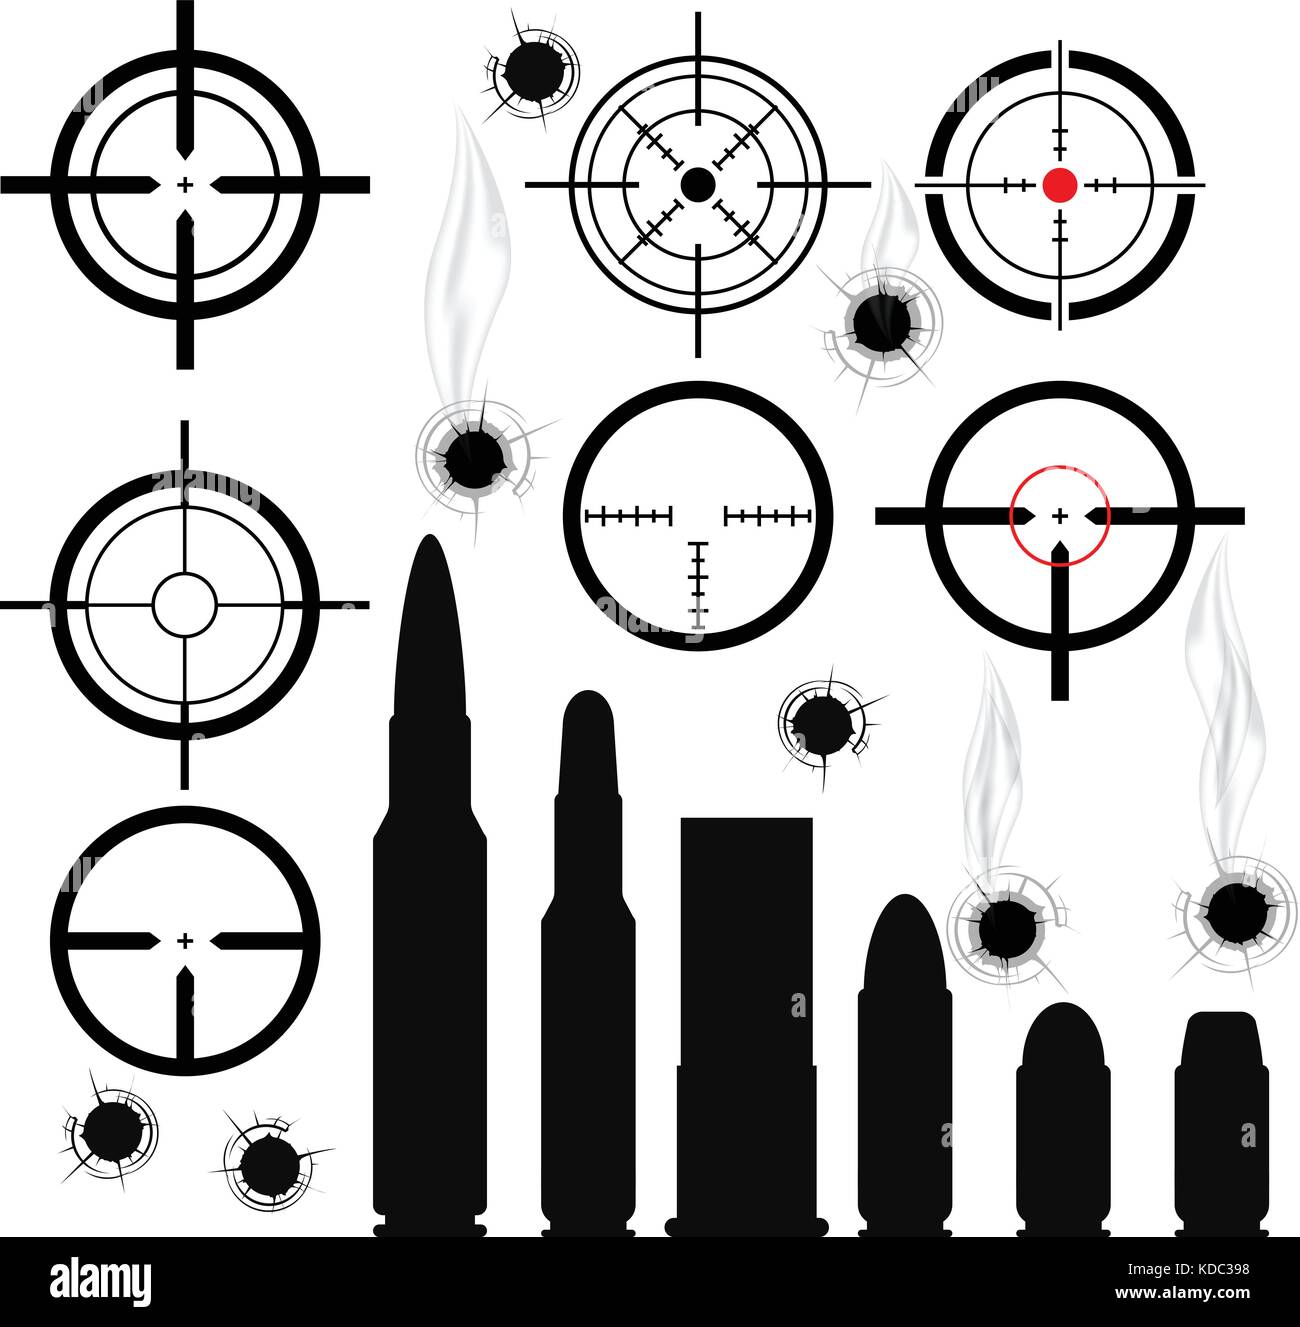 Crosshairs (gun sights), bullet cartridges and bullet holes Stock Vector